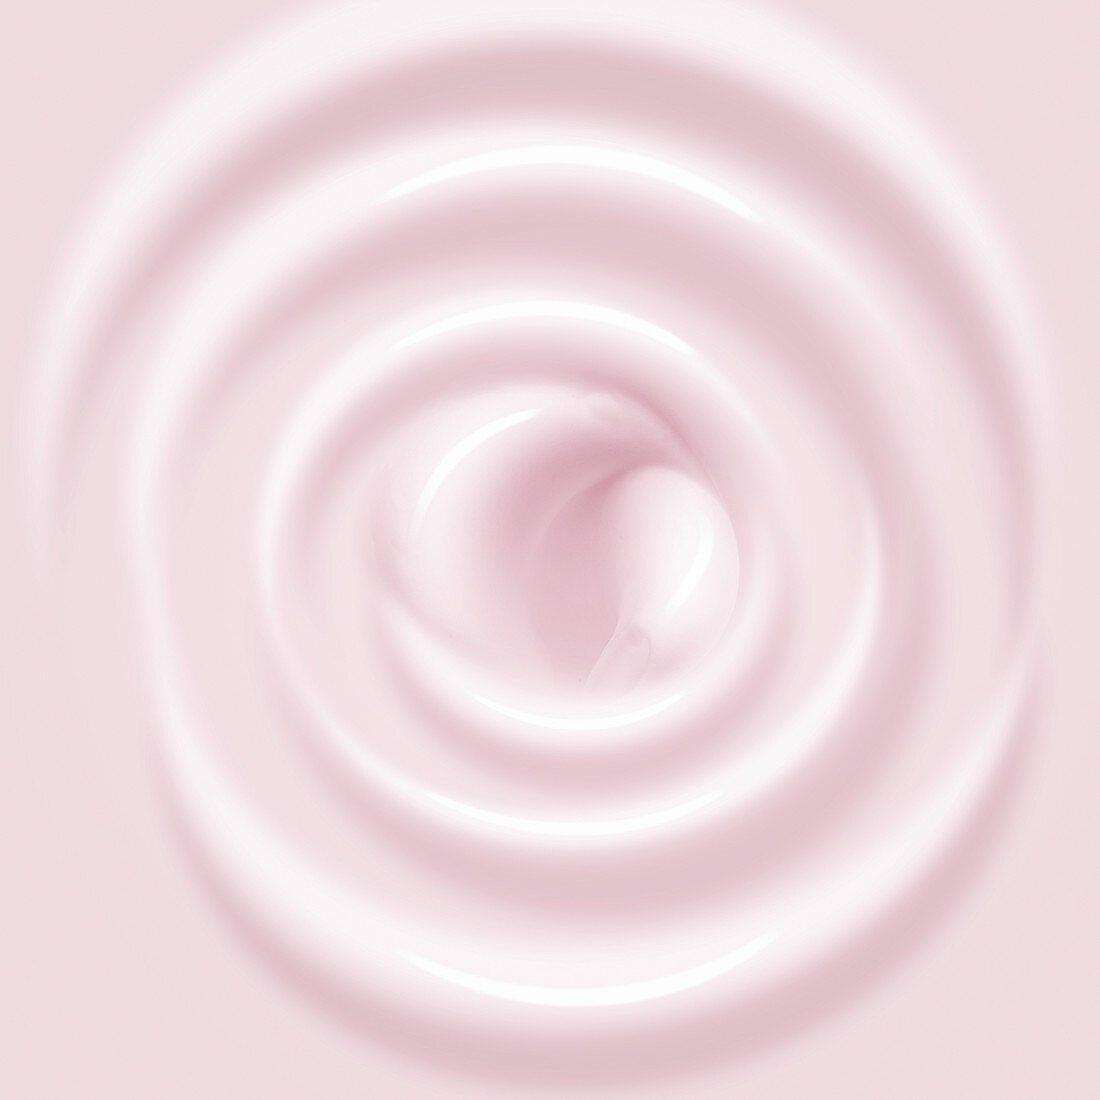 Swirl of pink cream